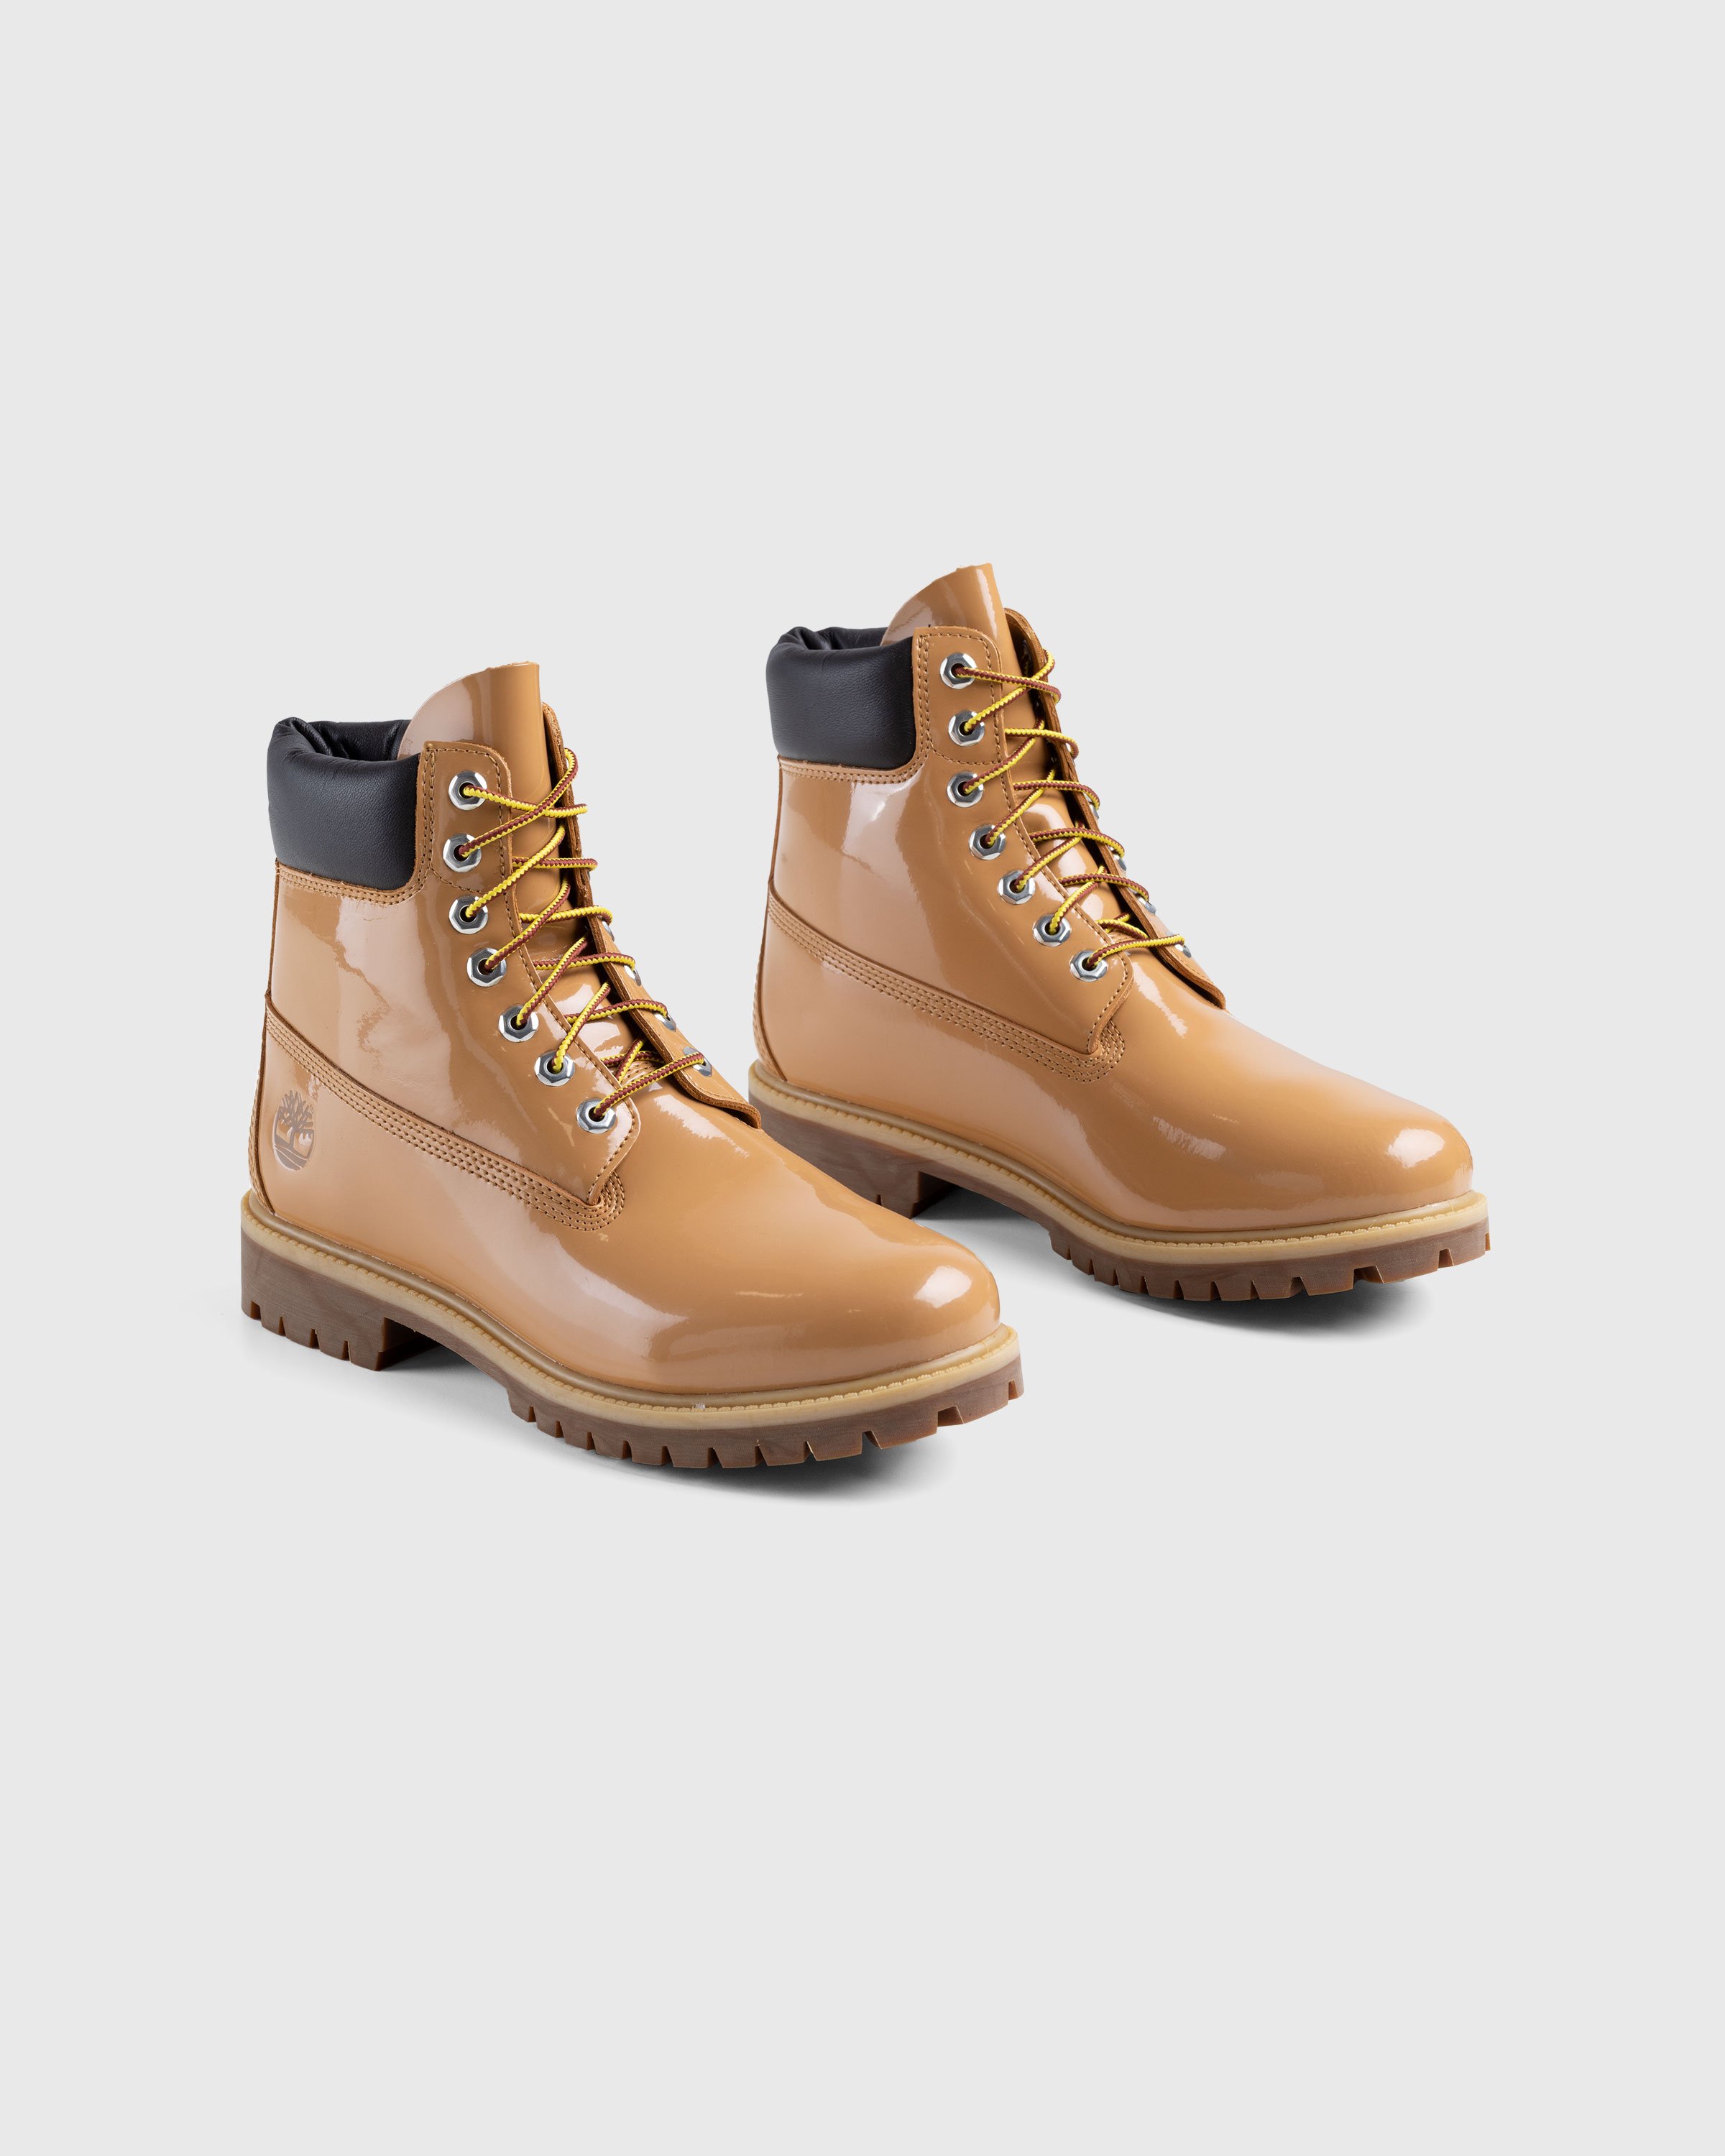 Veneda Carter x Timberland - 6" Patent Leather Boot - Footwear - Brown - Image 3